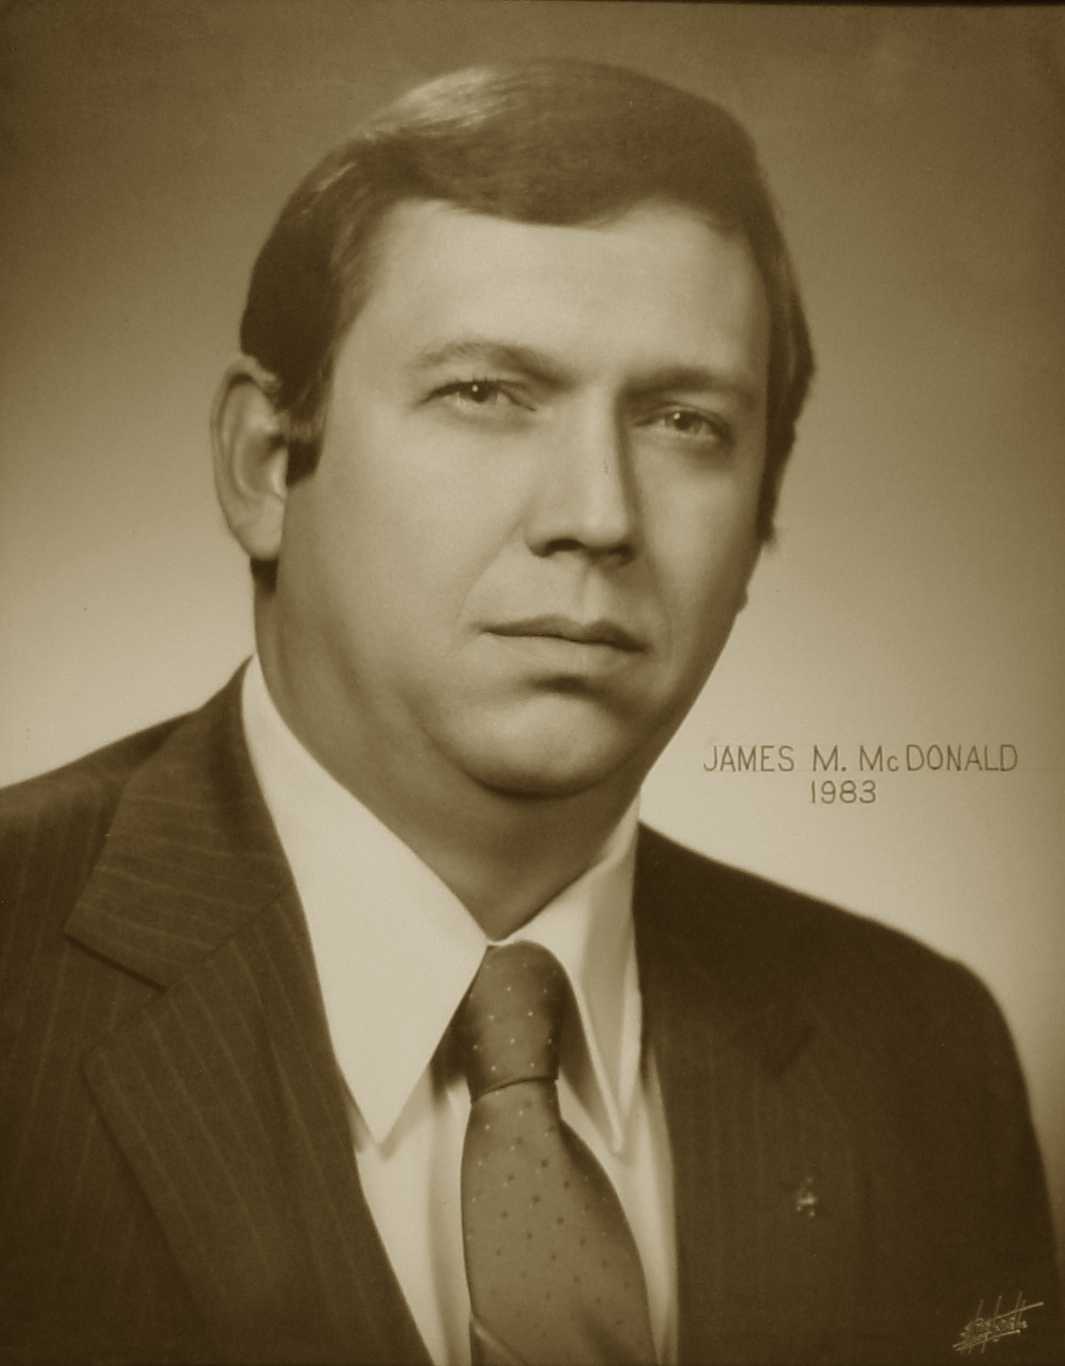 James M. McDonald, 1983